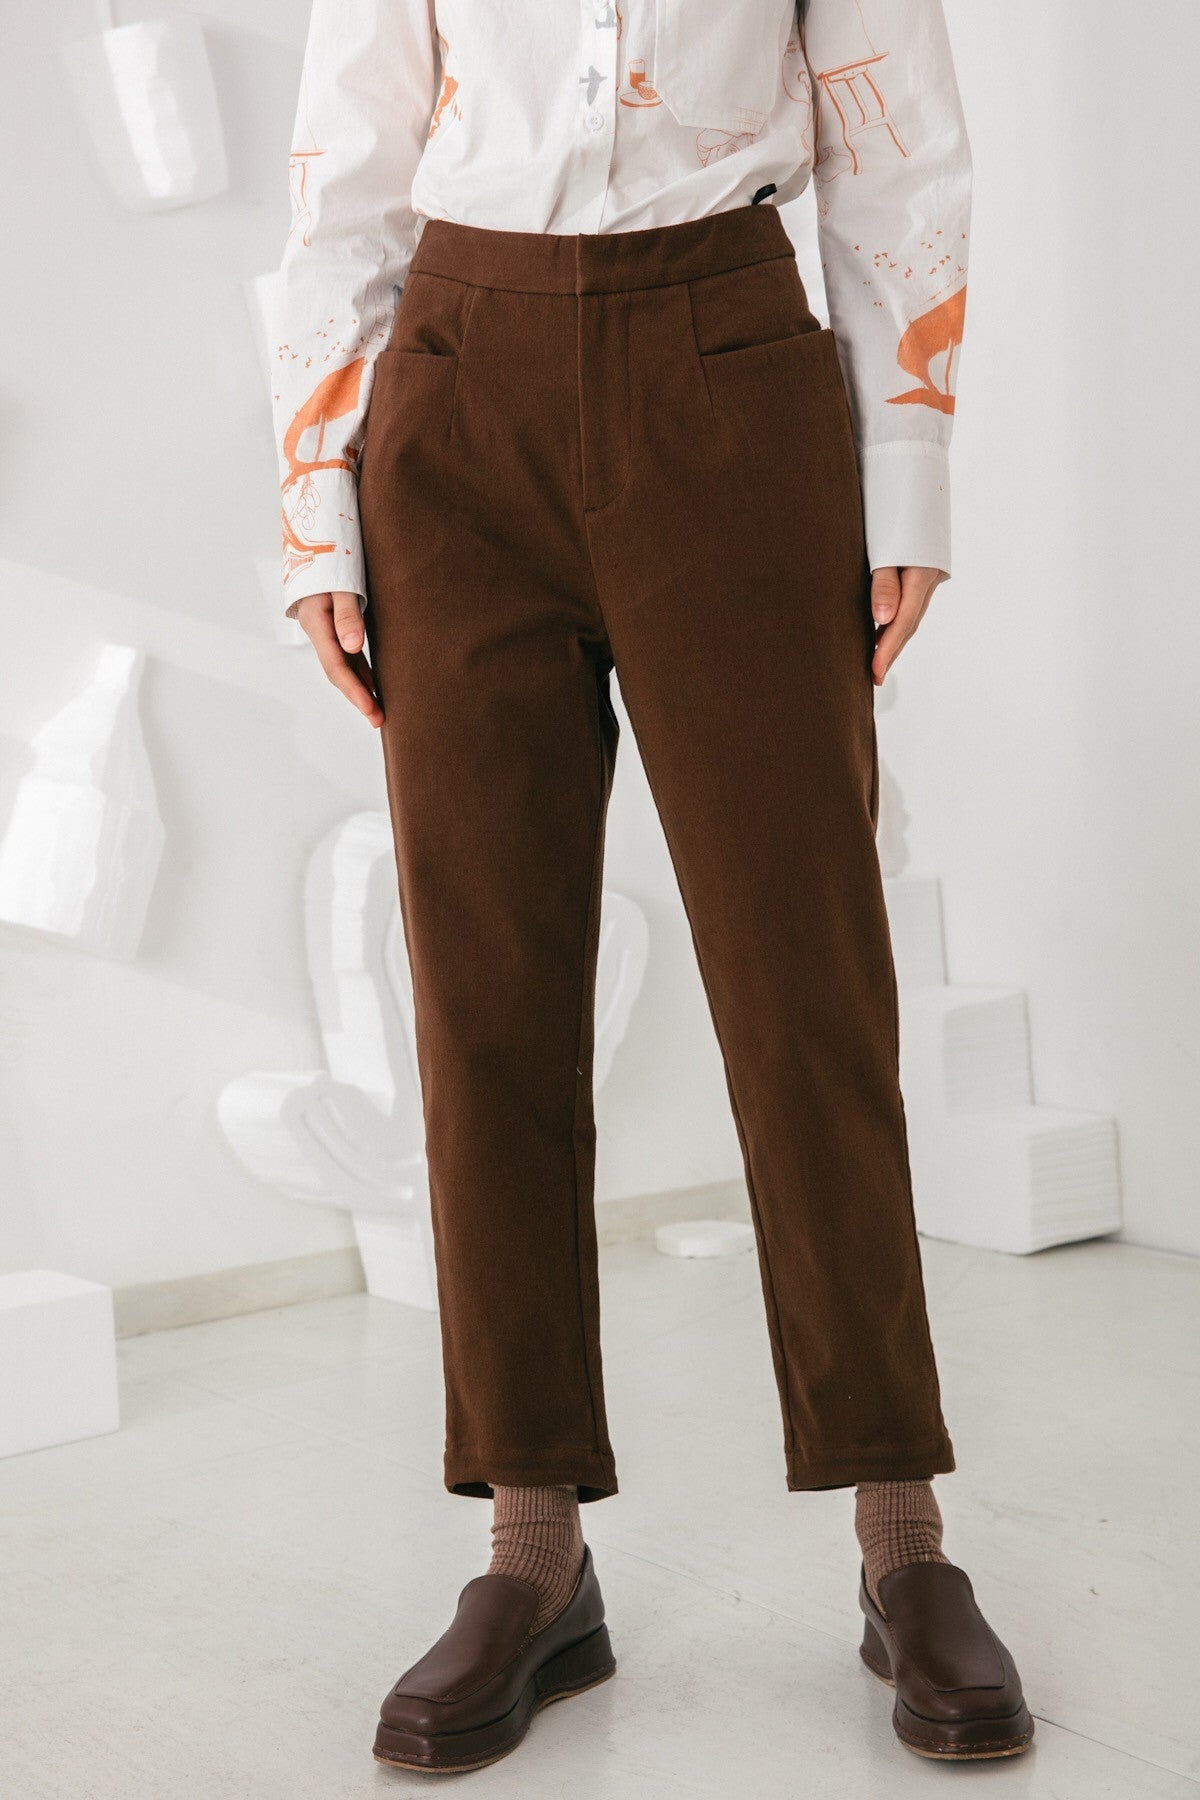 SKYE San Francisco SF shop ethical modern minimalist quality women clothing fashion André Pants brown 2